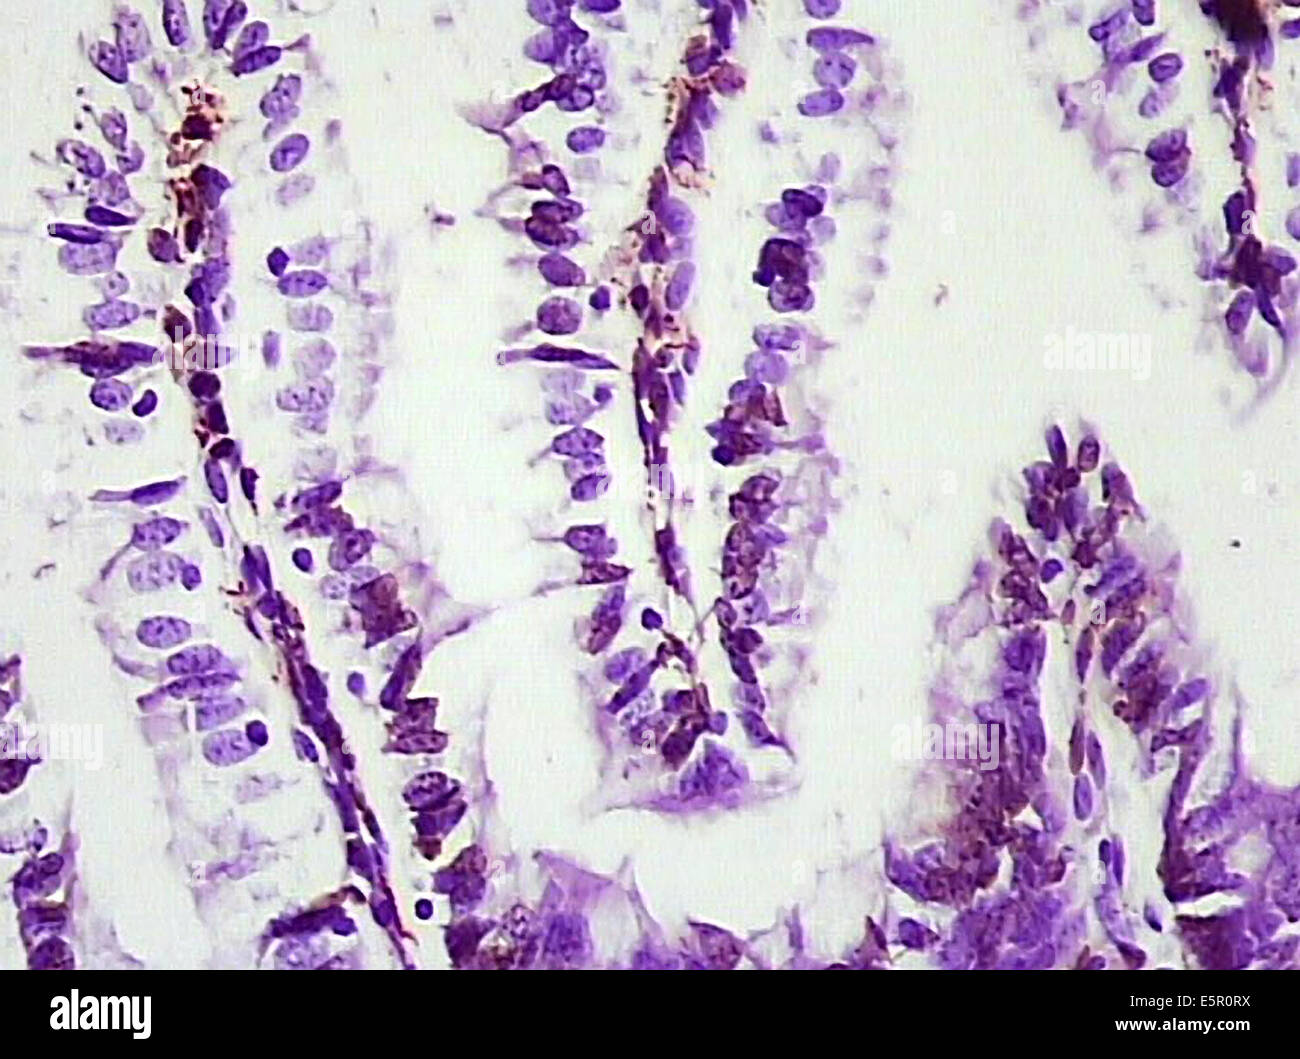 Photomicrograph of the villi lining the intestine walls. Stock Photo